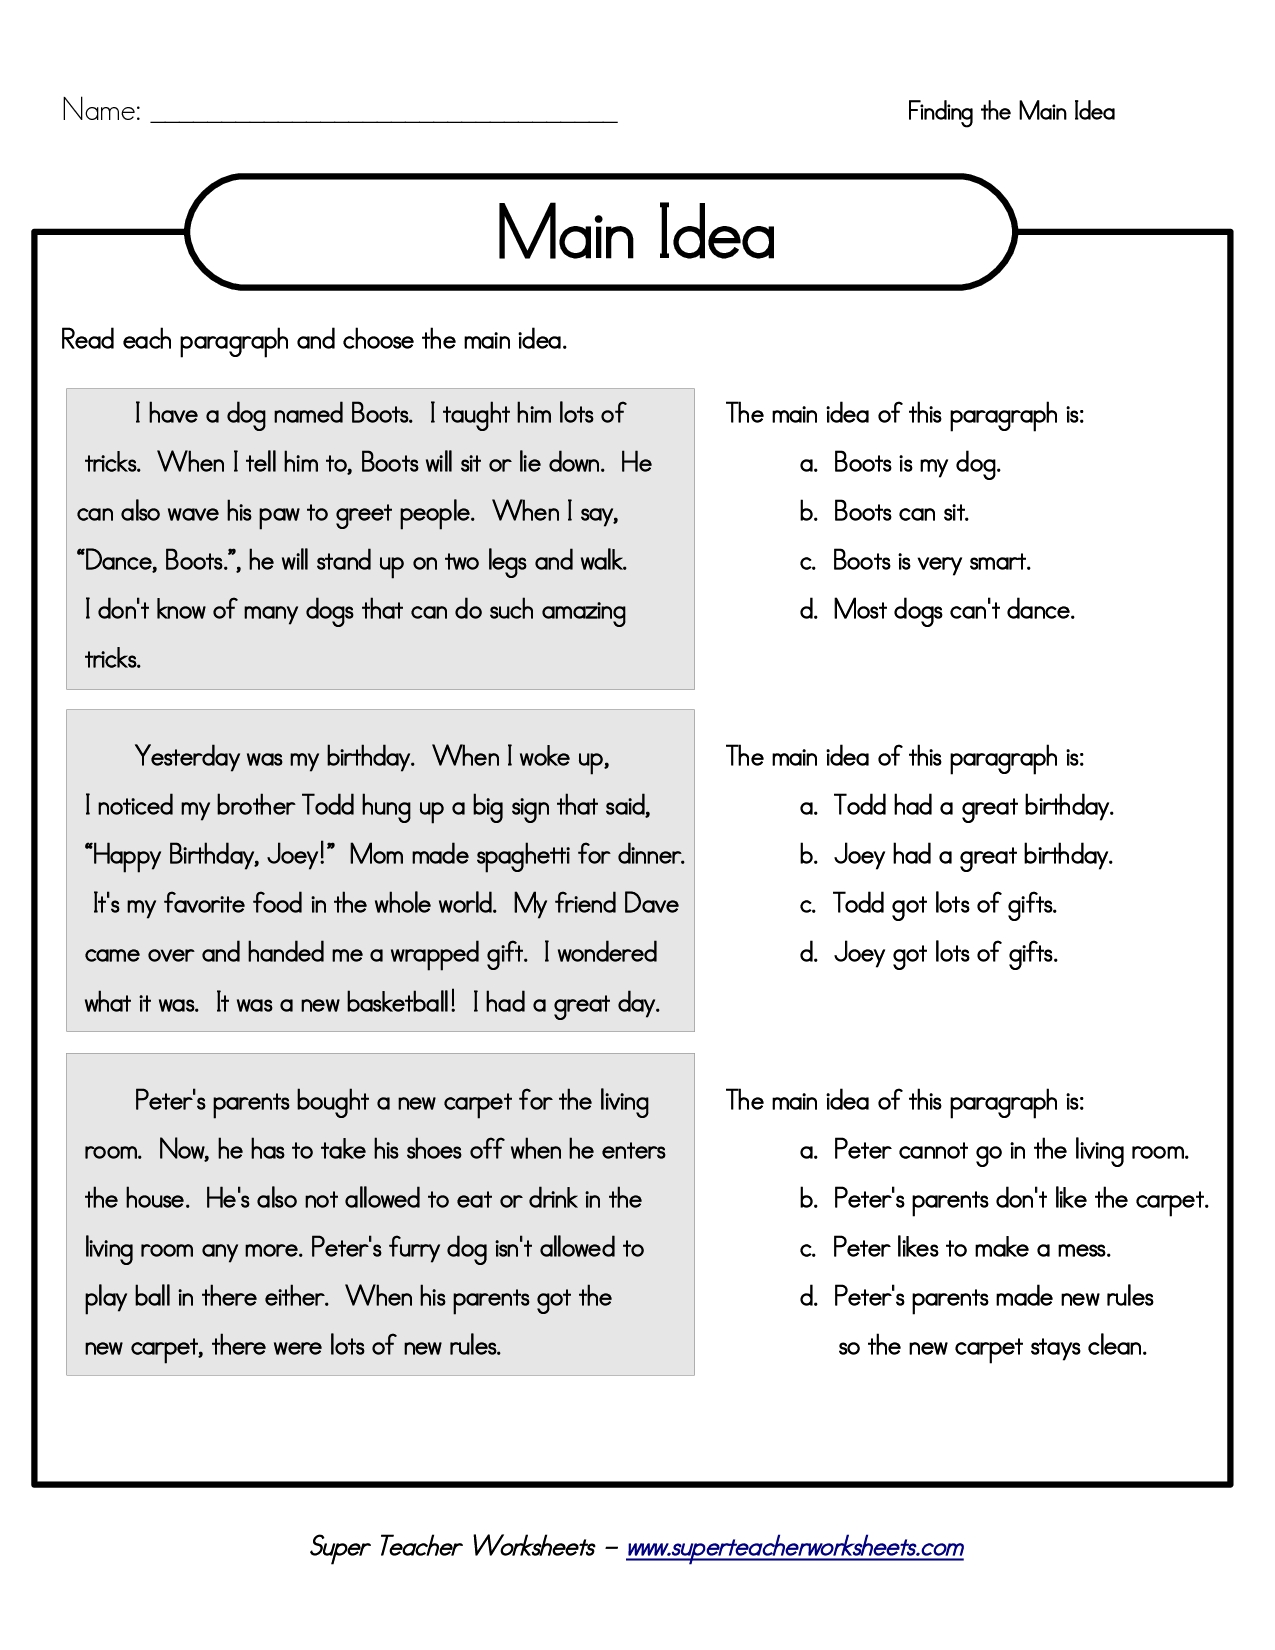 10 Ideal 3Rd Grade Main Idea Worksheets sample 3rd grade paragraph finding the main idea main idea 8 2022